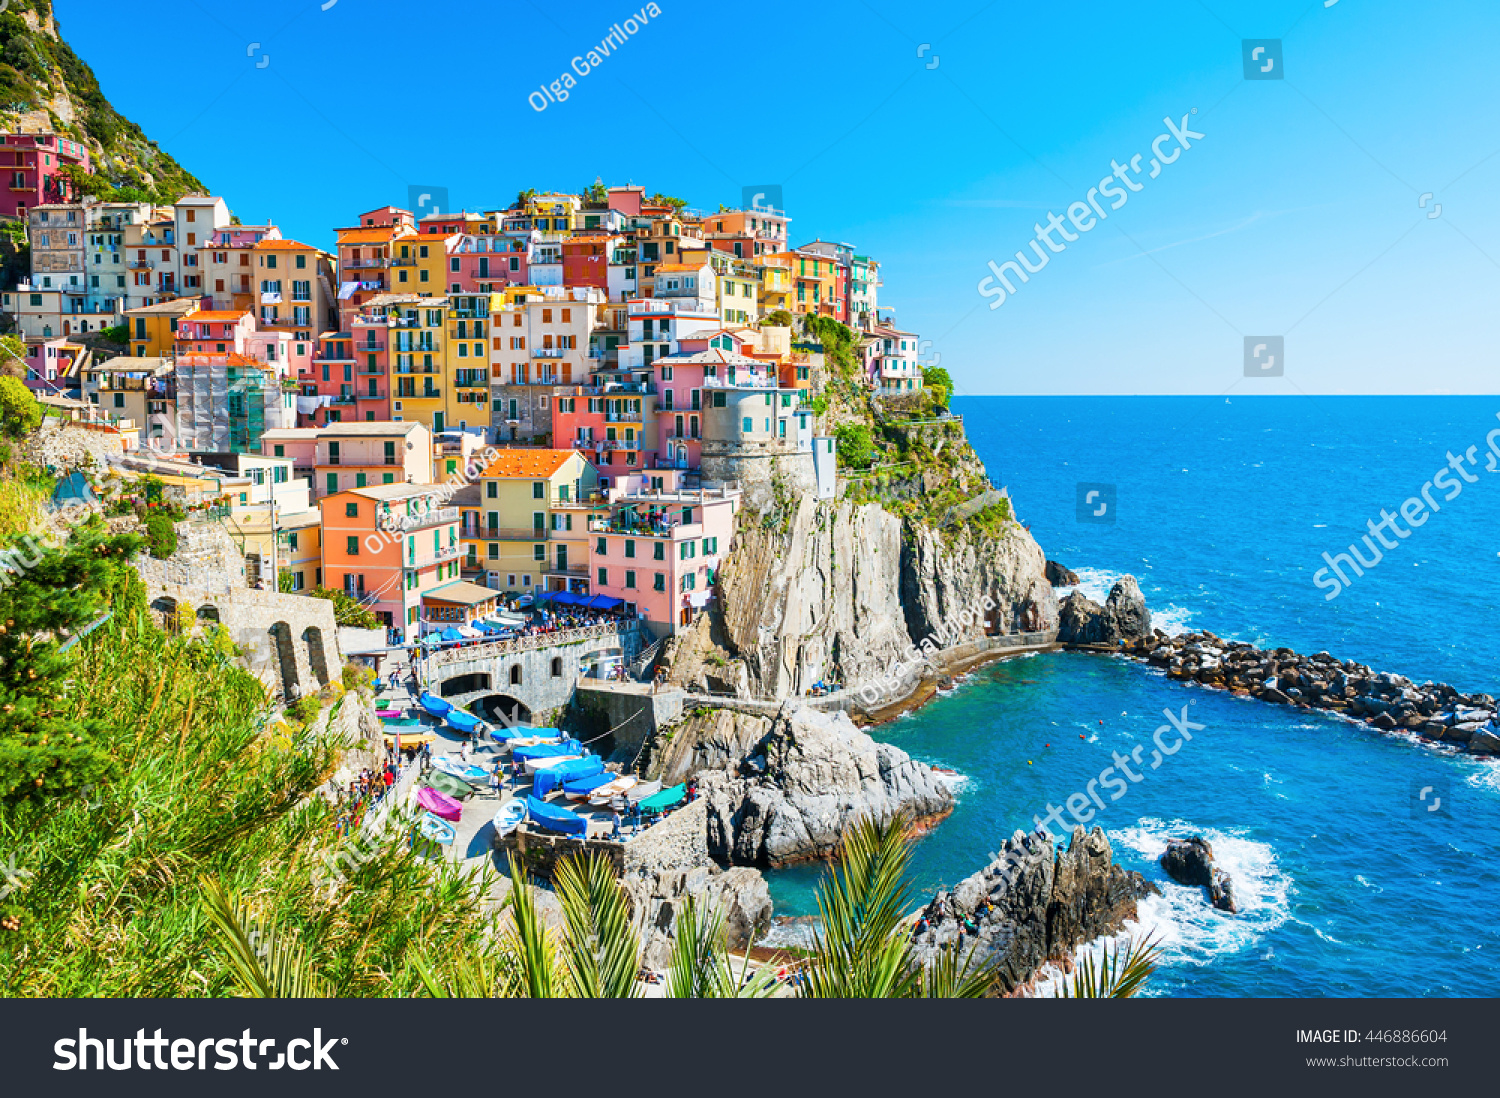 Beautiful view of Manarola town, Cinque Terre, Liguria, Italy #446886604